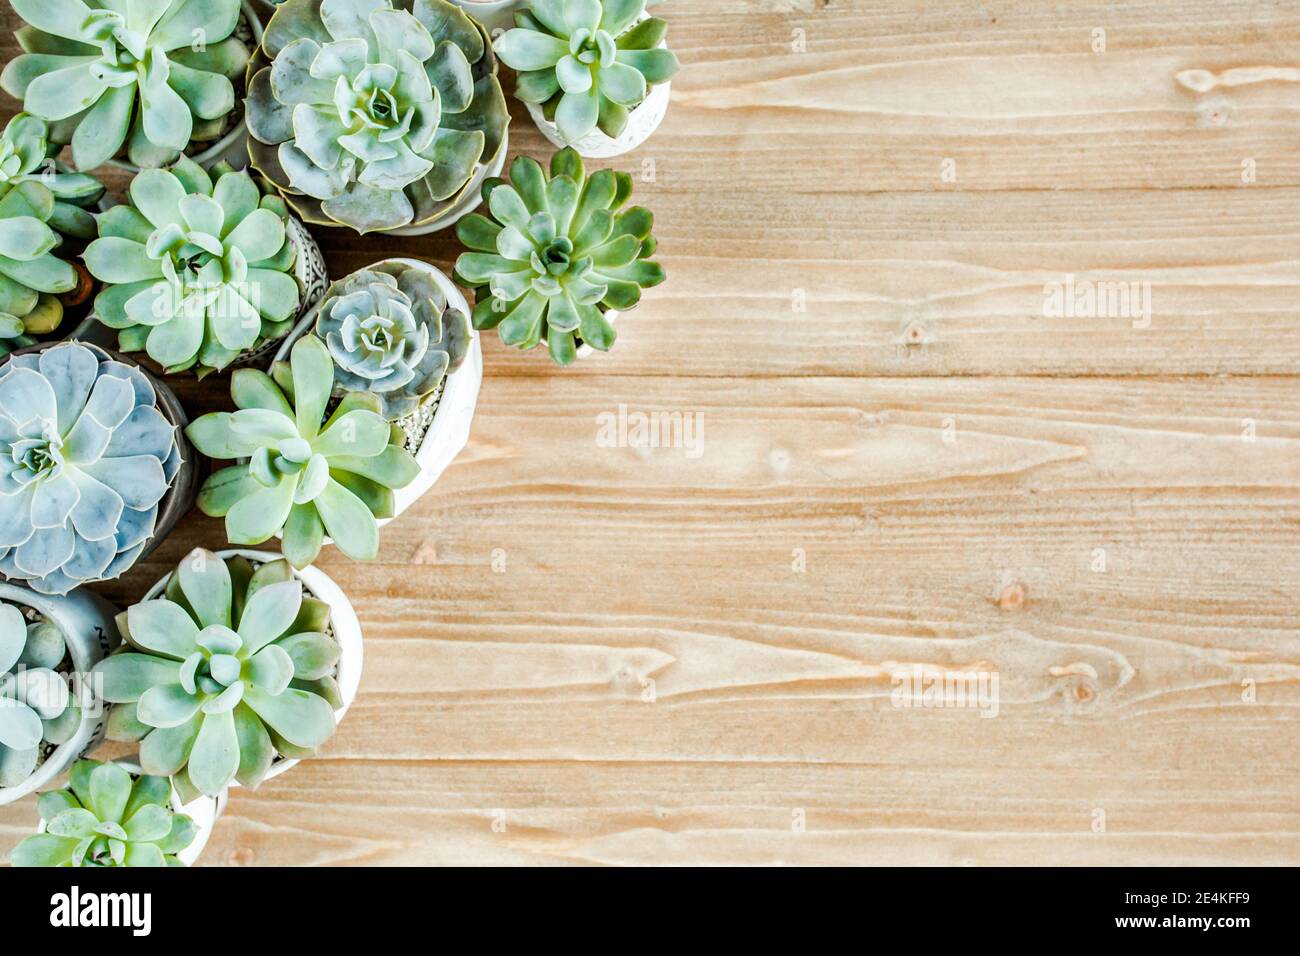 156676 Succulents Wallpaper Images Stock Photos  Vectors  Shutterstock